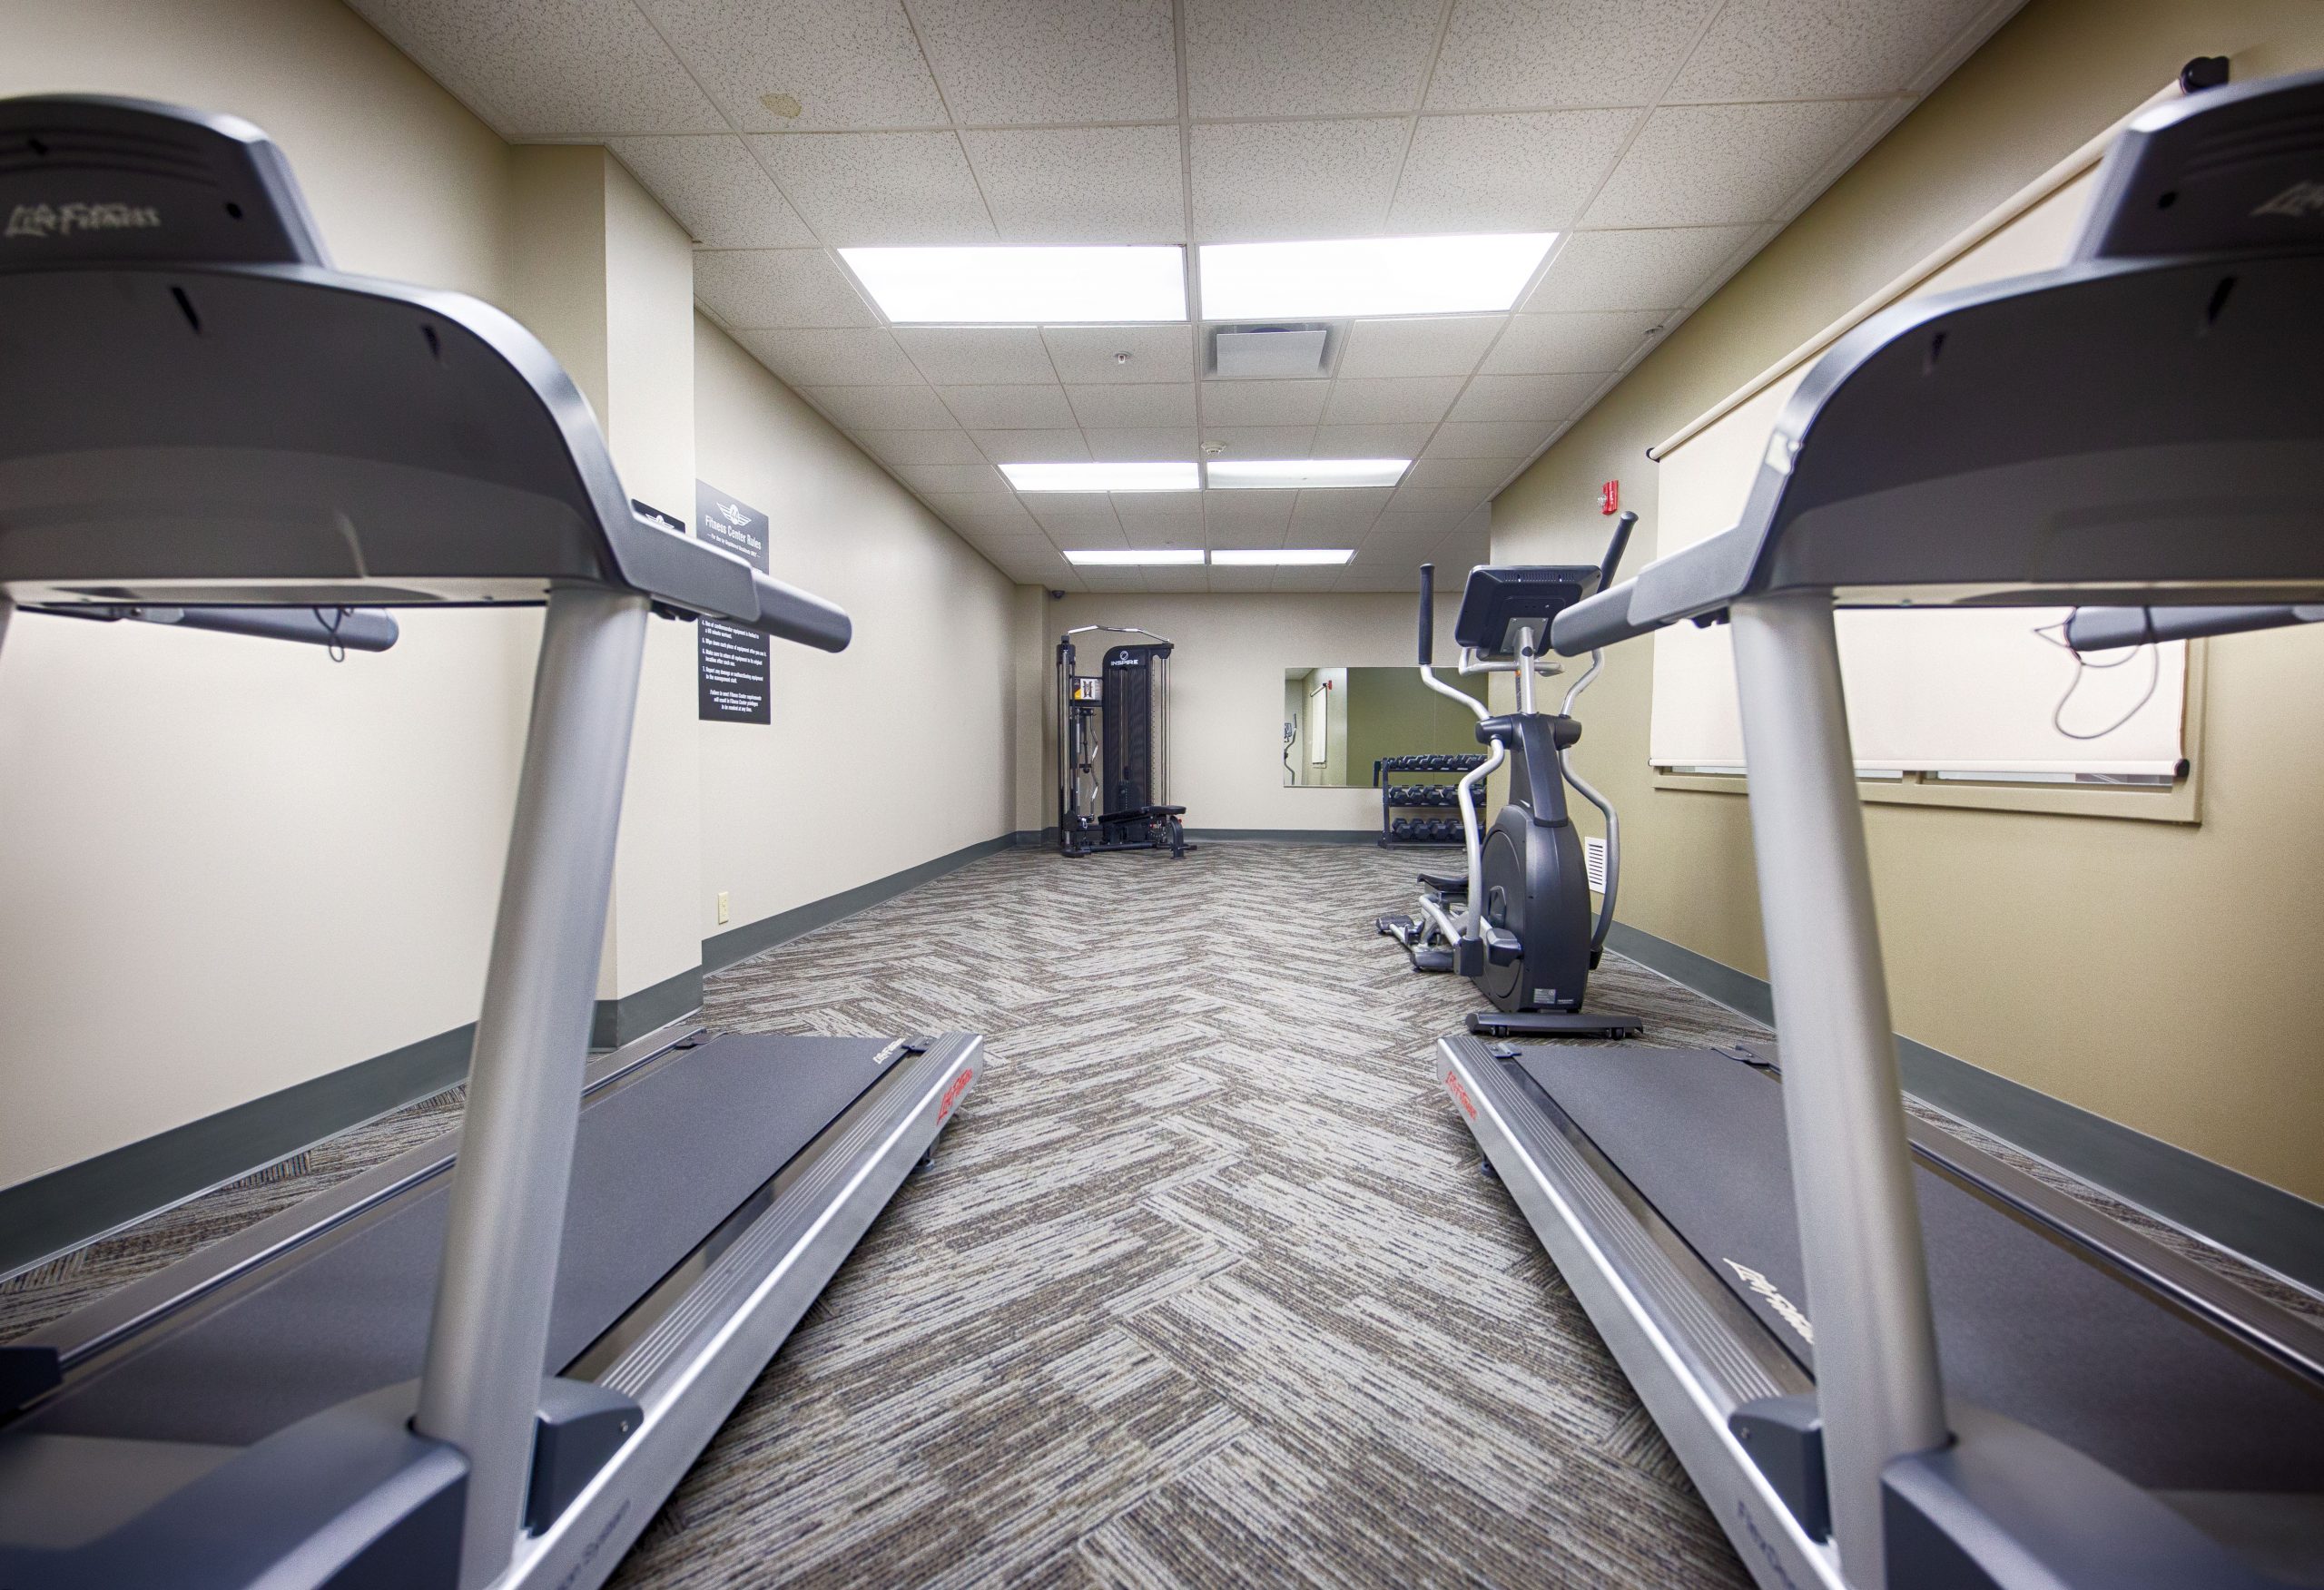 image of treadmills